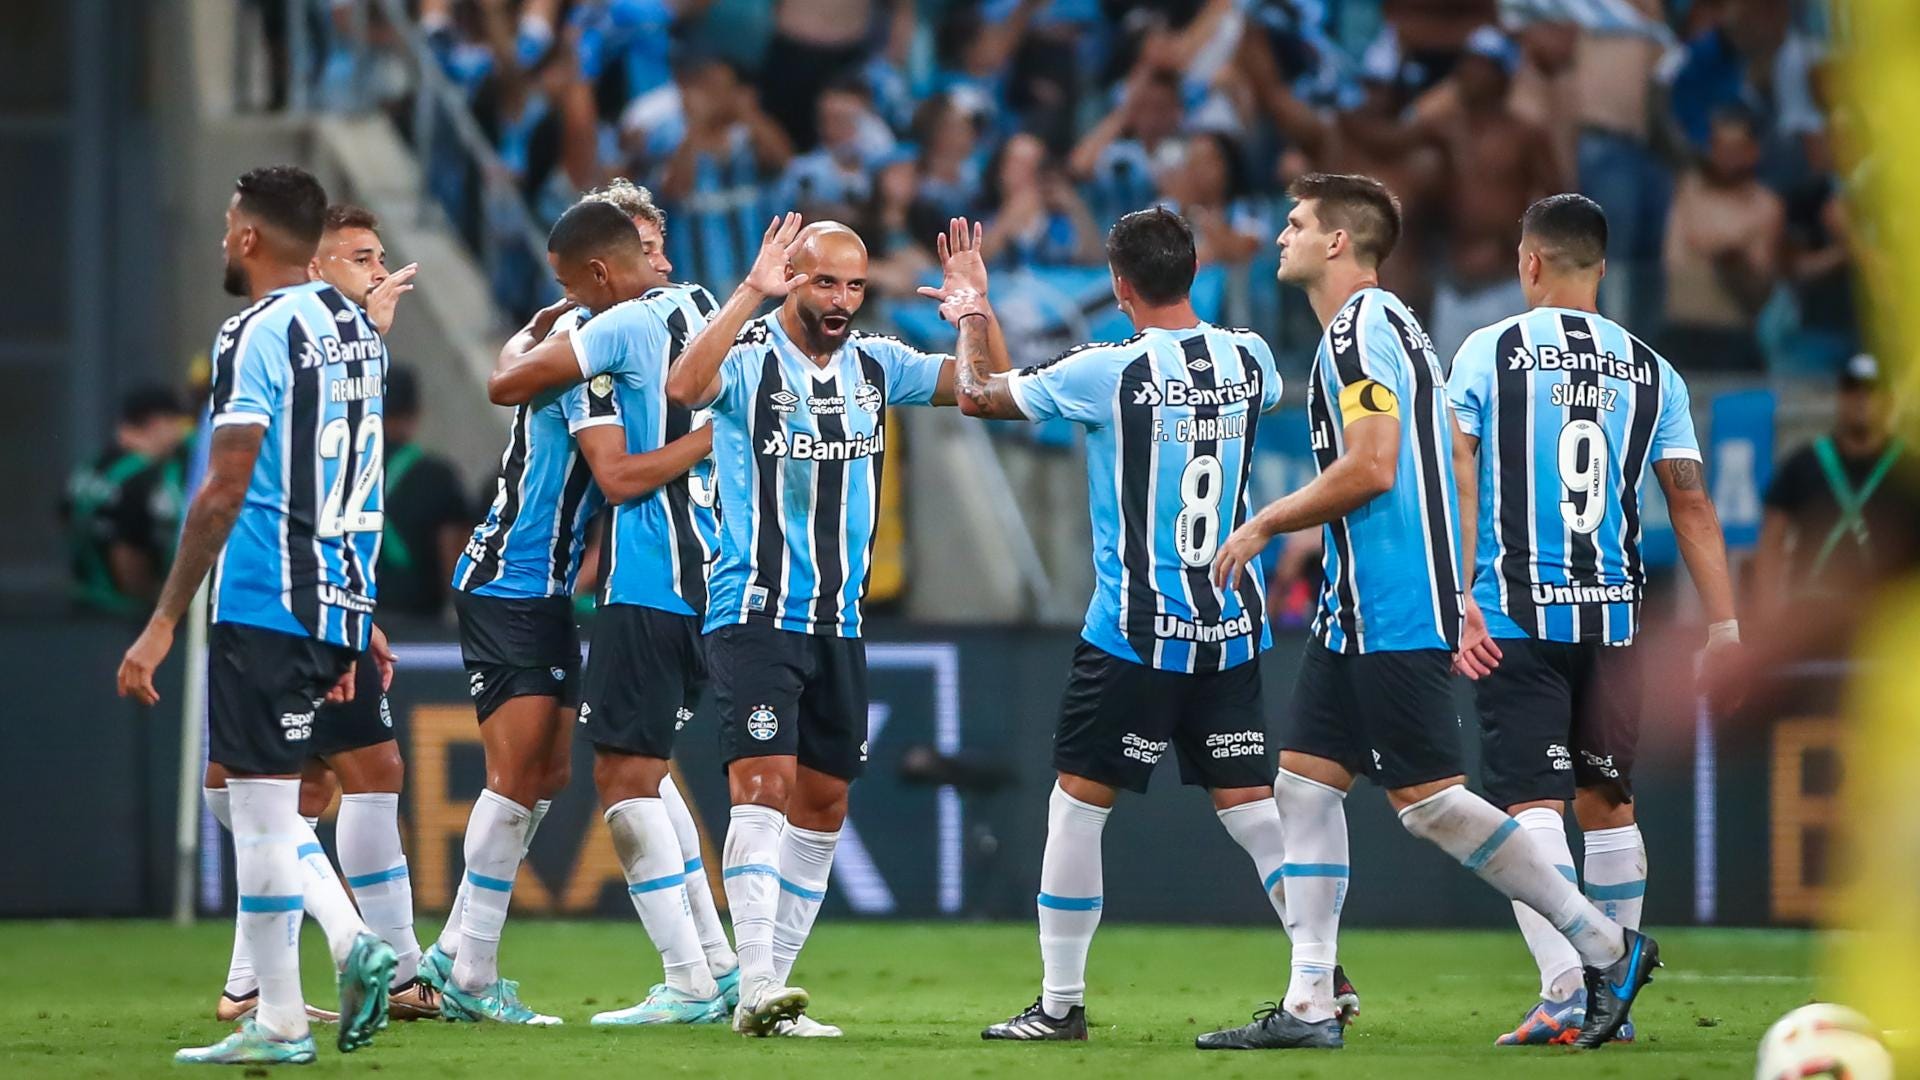 Grêmio vs Santos: A Battle of Brazilian Football Giants